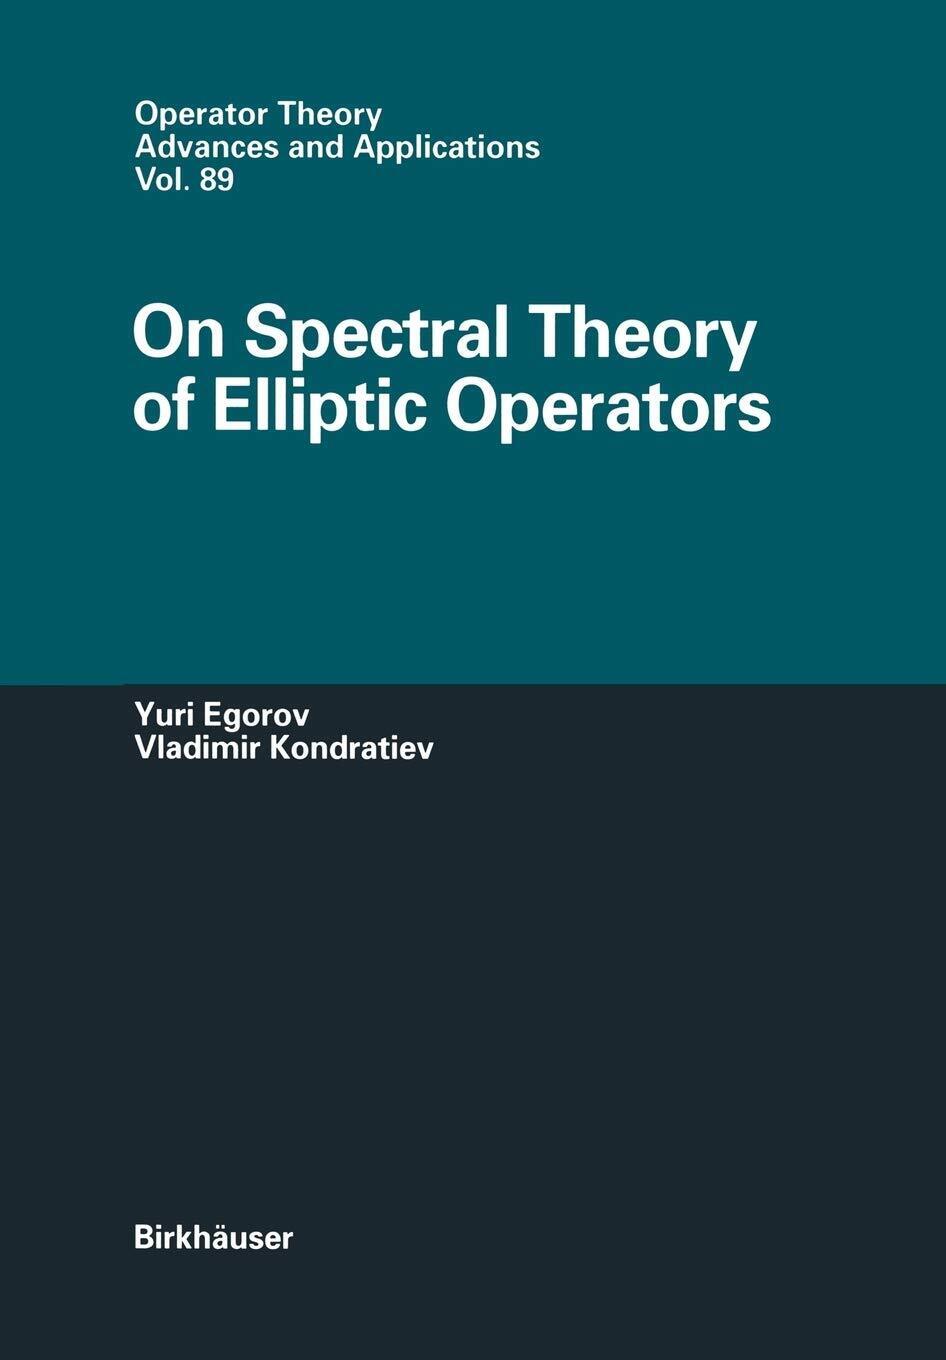 On Spectral Theory of Elliptic Operators - Yuri V. Egorov - Birkh?user, 2011 libro usato